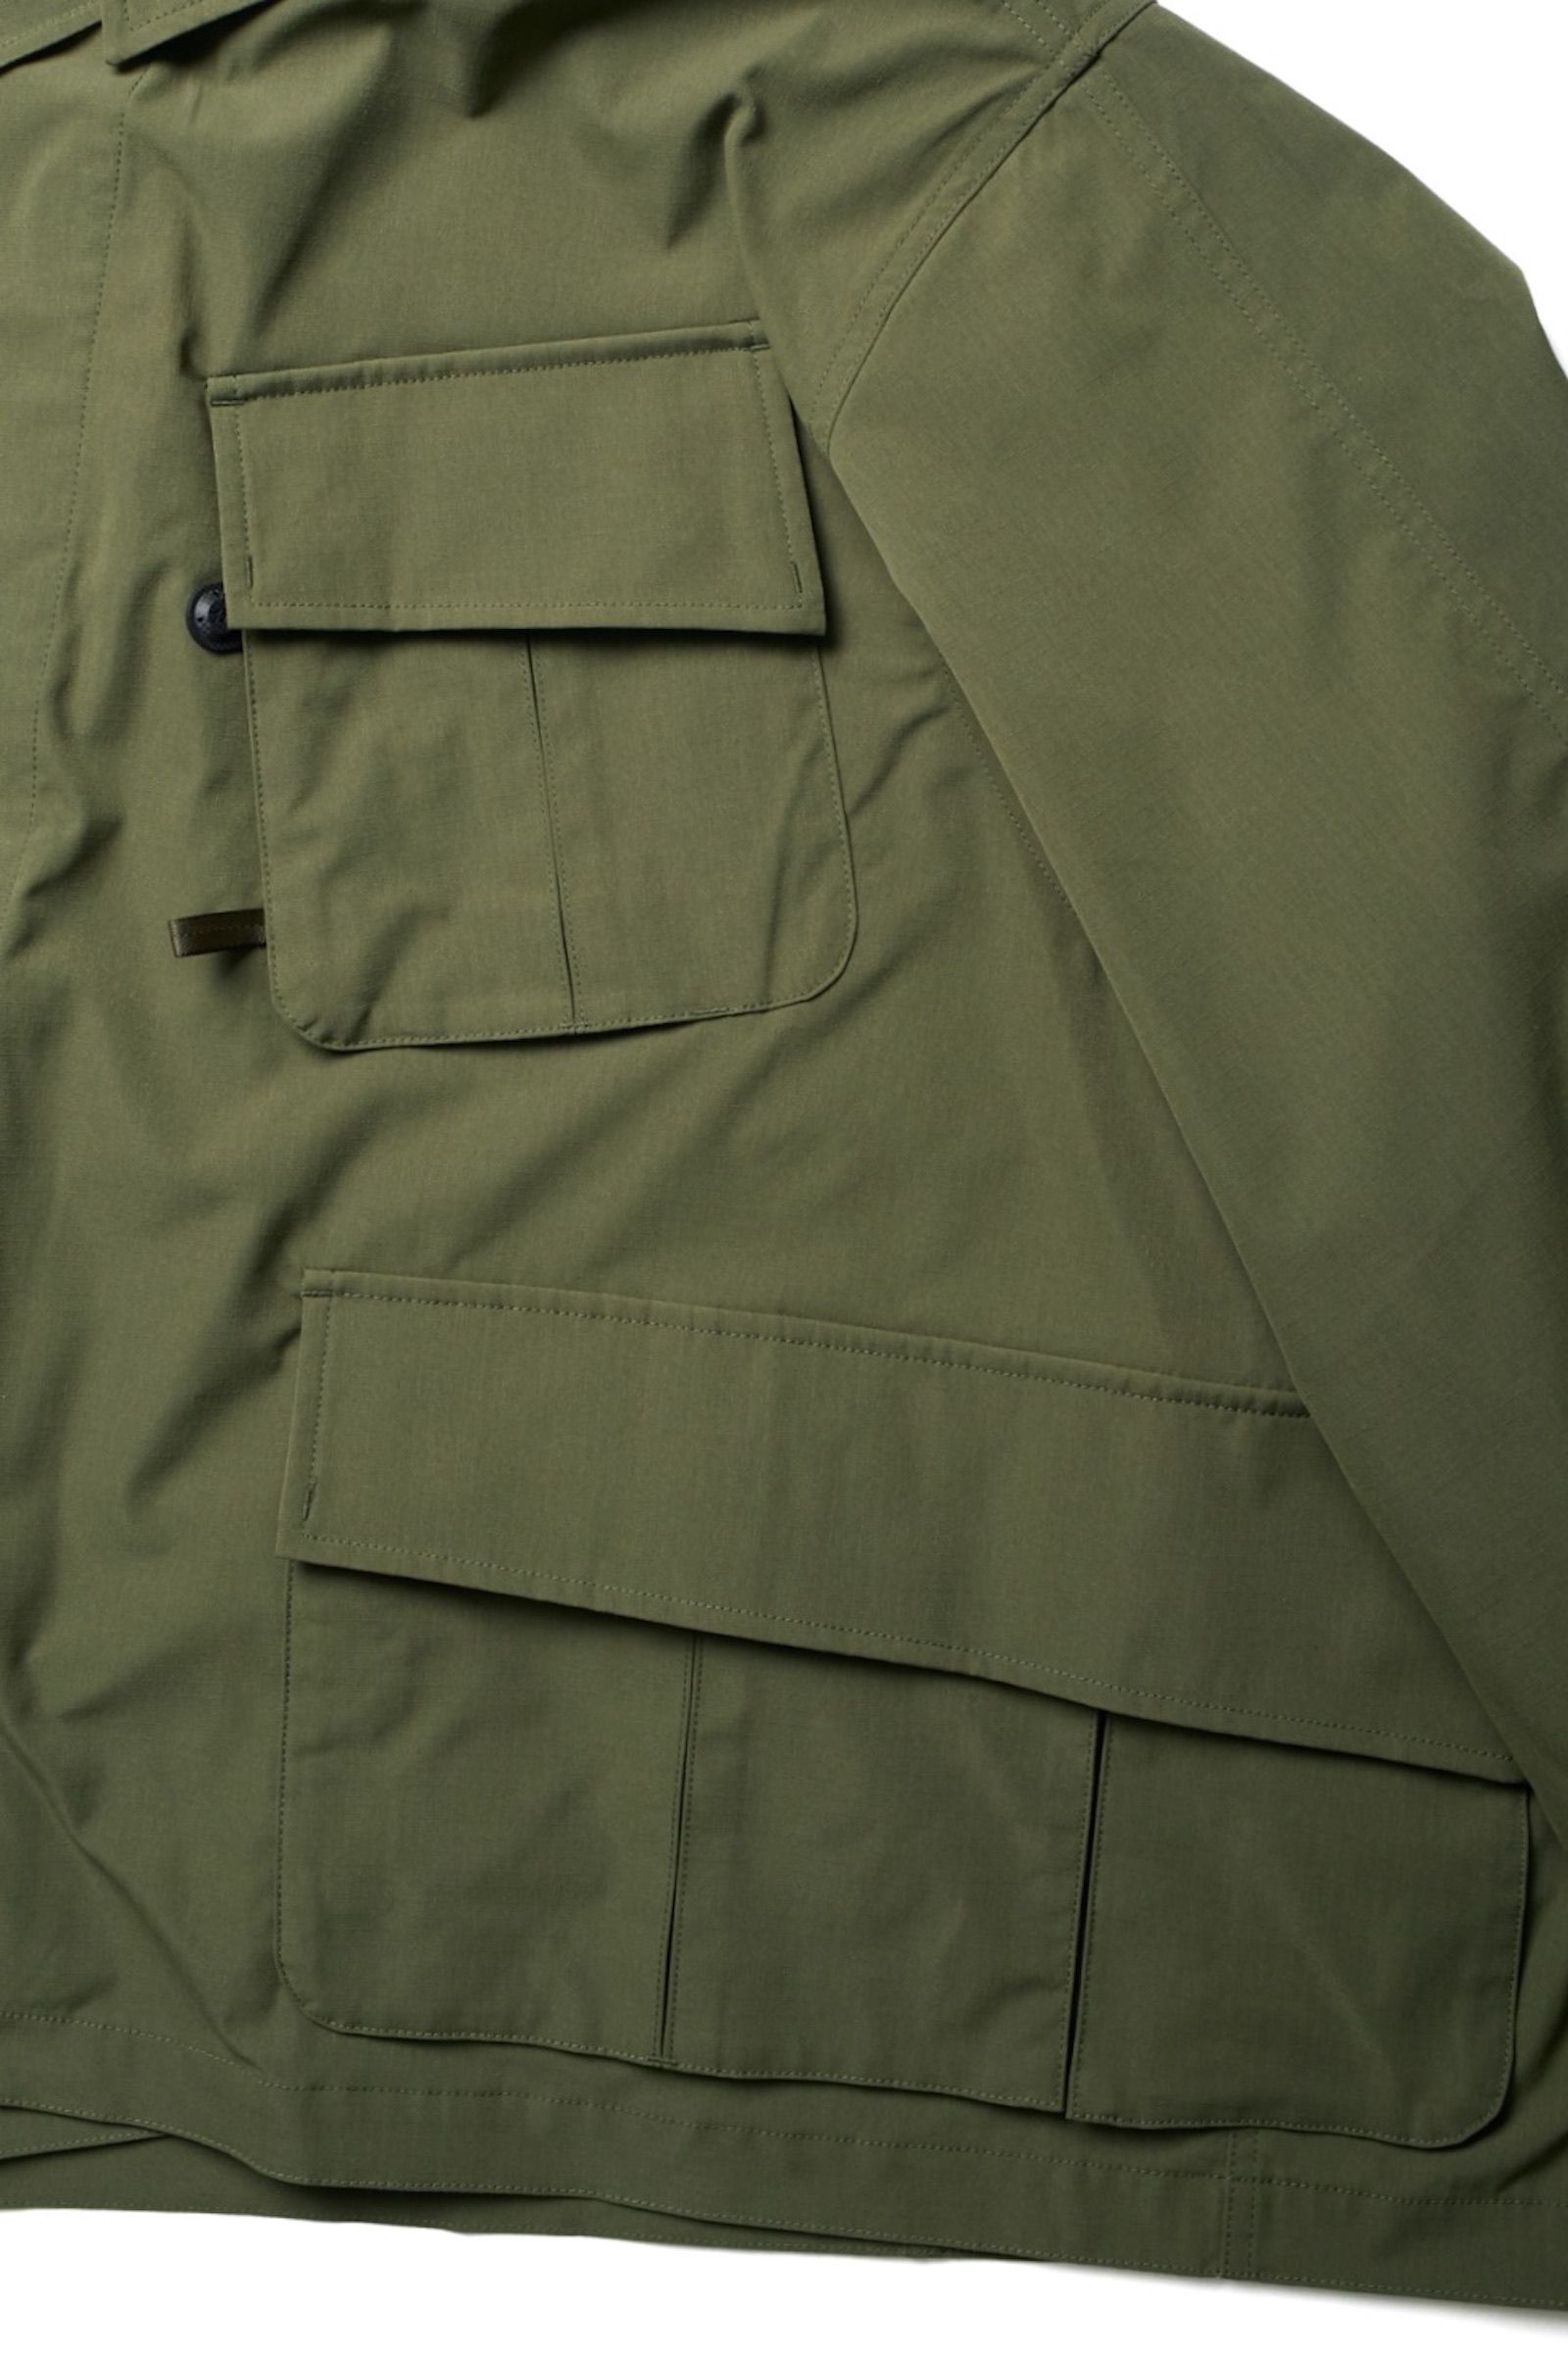 tech jungle fatigue jacket 21aw - L - BLACK